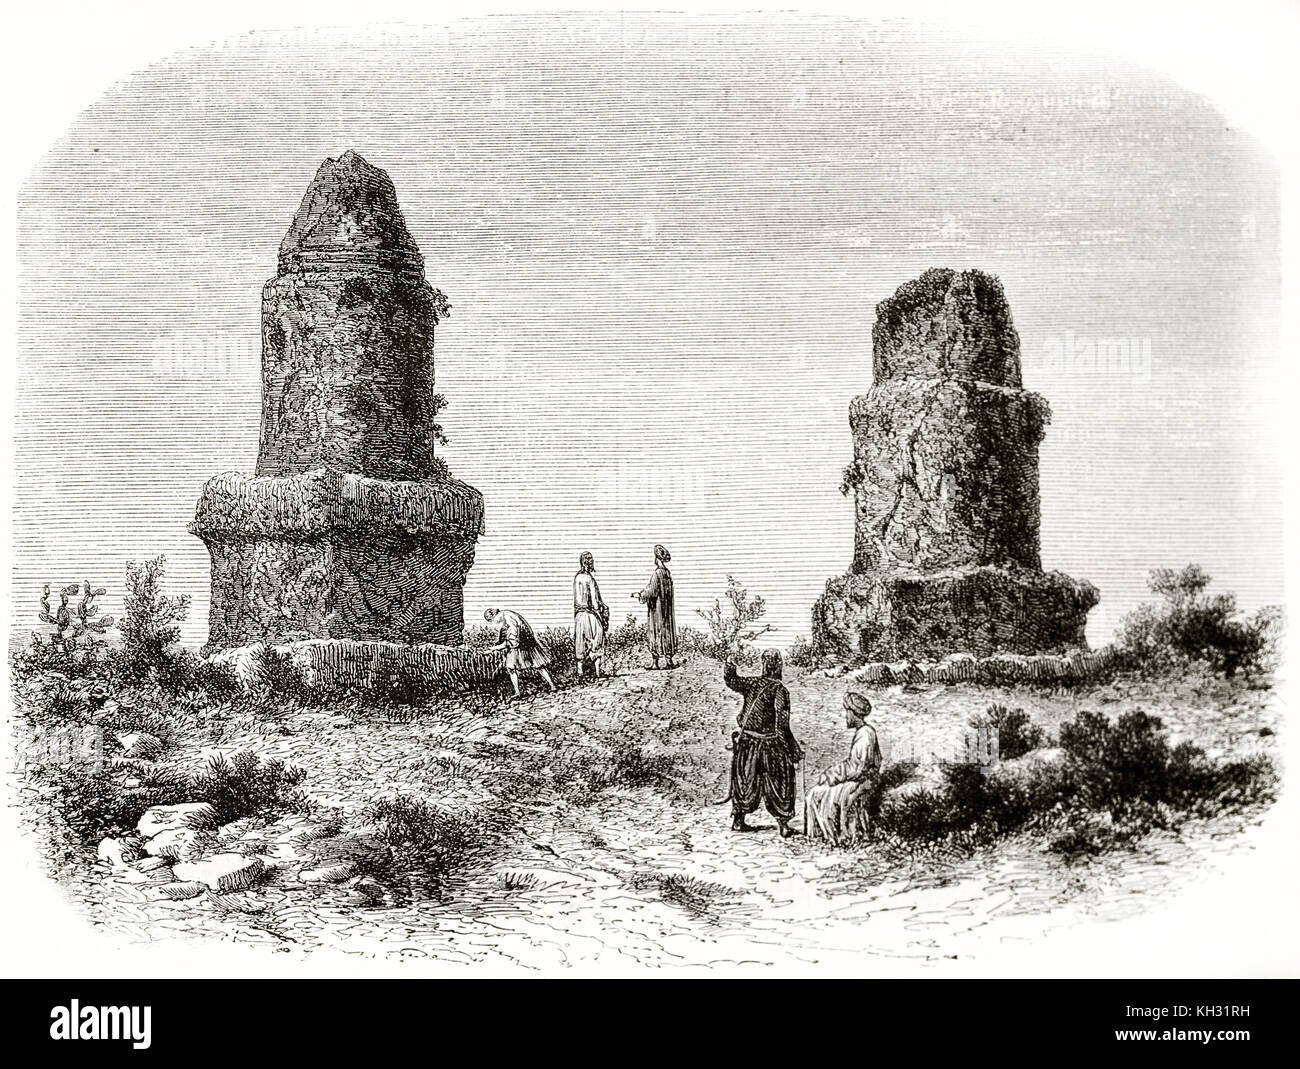 The Spindles, Phoenician burial towers in Amrit necropolis, near Tartus, Syria. By De Bar after Lockroy, publ. on le Tour du Monde, Paris, 1863 Stock Photo